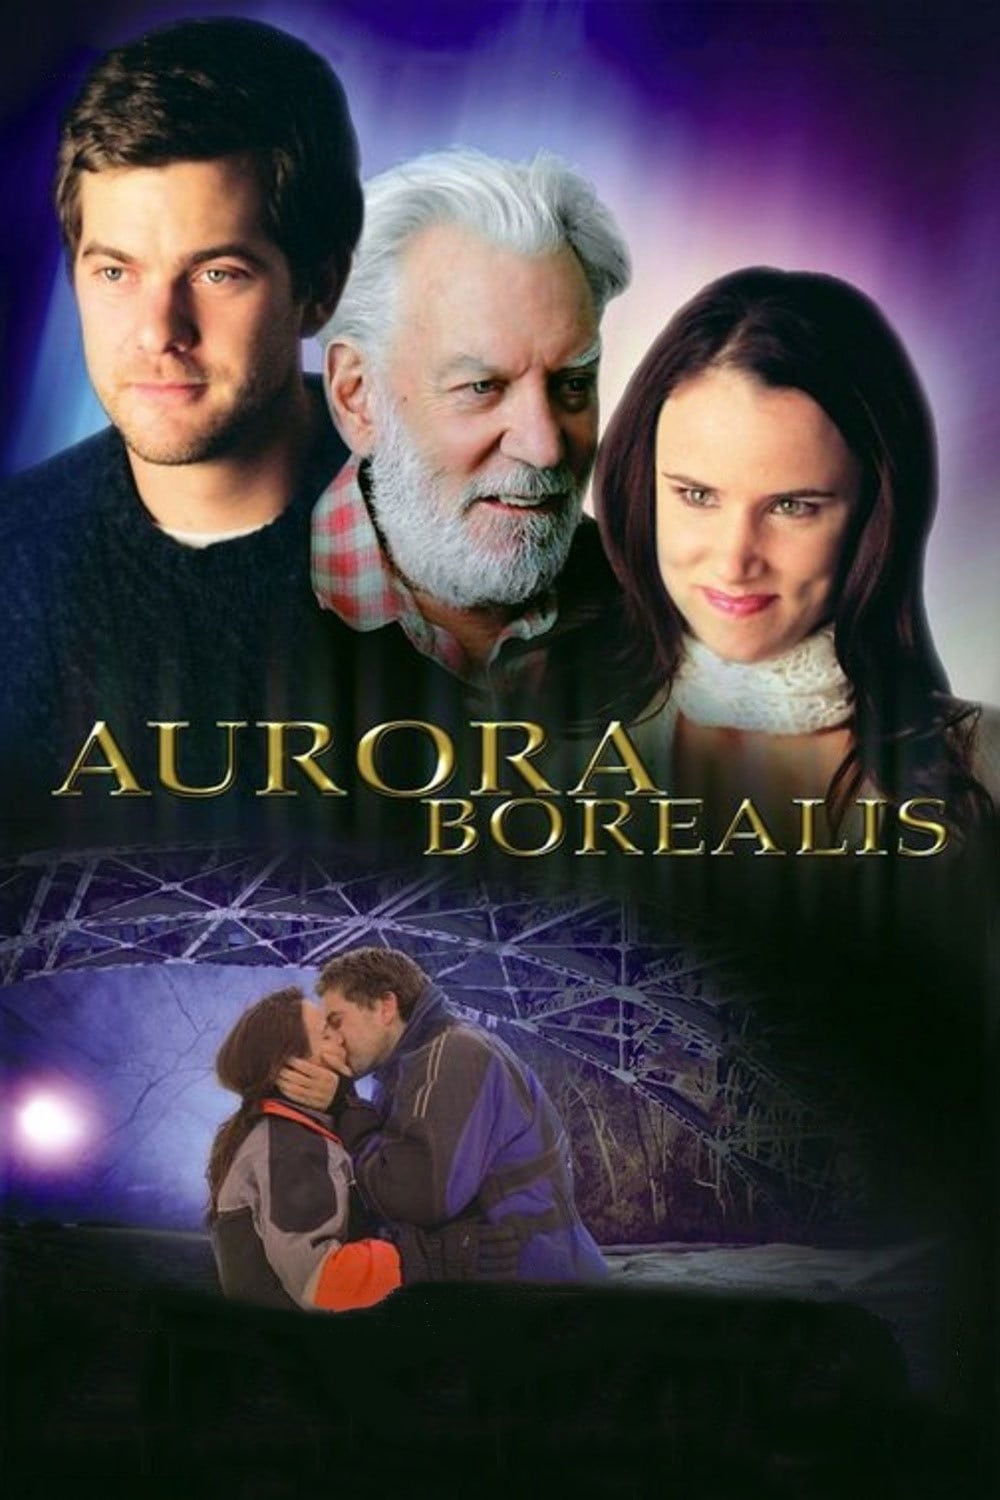 Plakat von "Aurora Borealis"